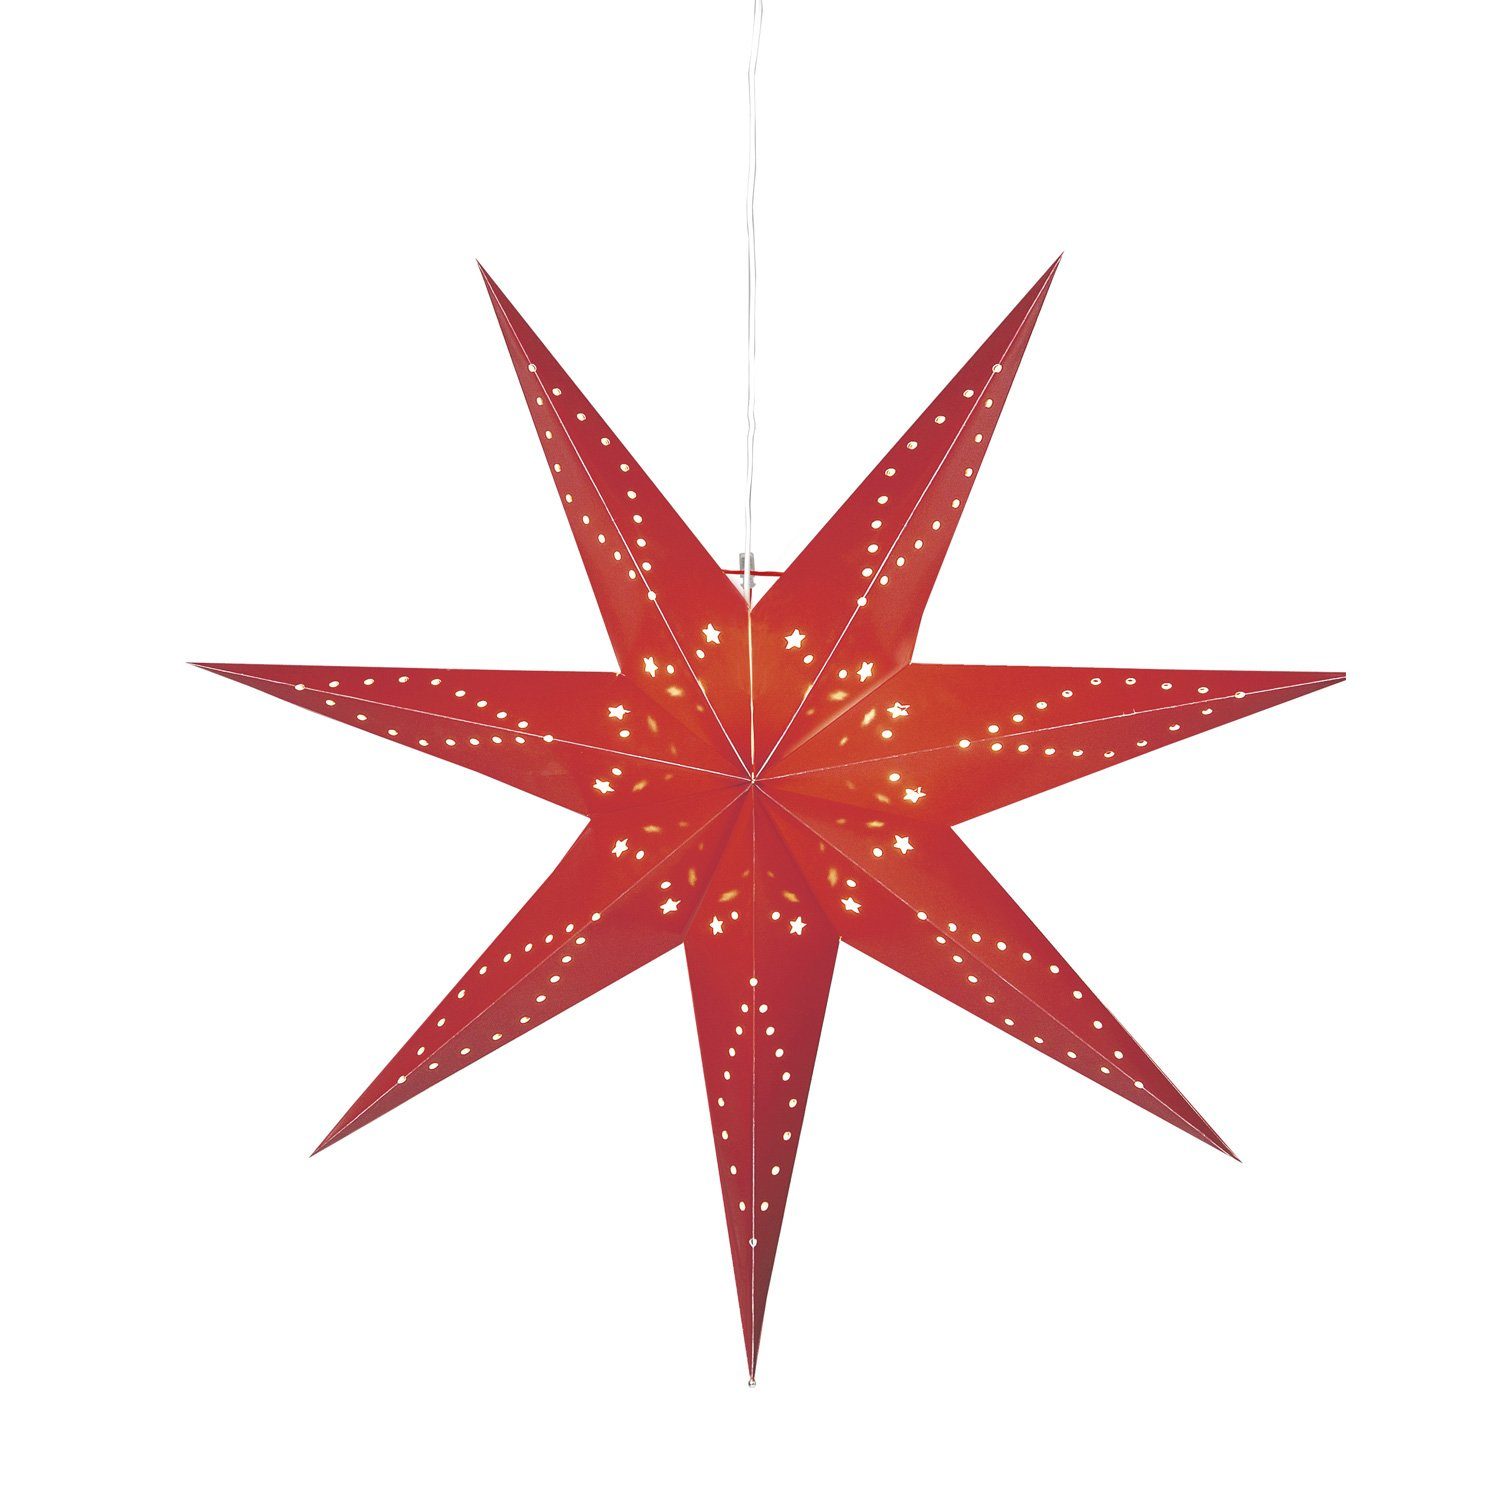 TRADING LED Faltstern rot Papierstern Kabel 7-zackig Stern 100cm m. hängend Leuchtstern STAR